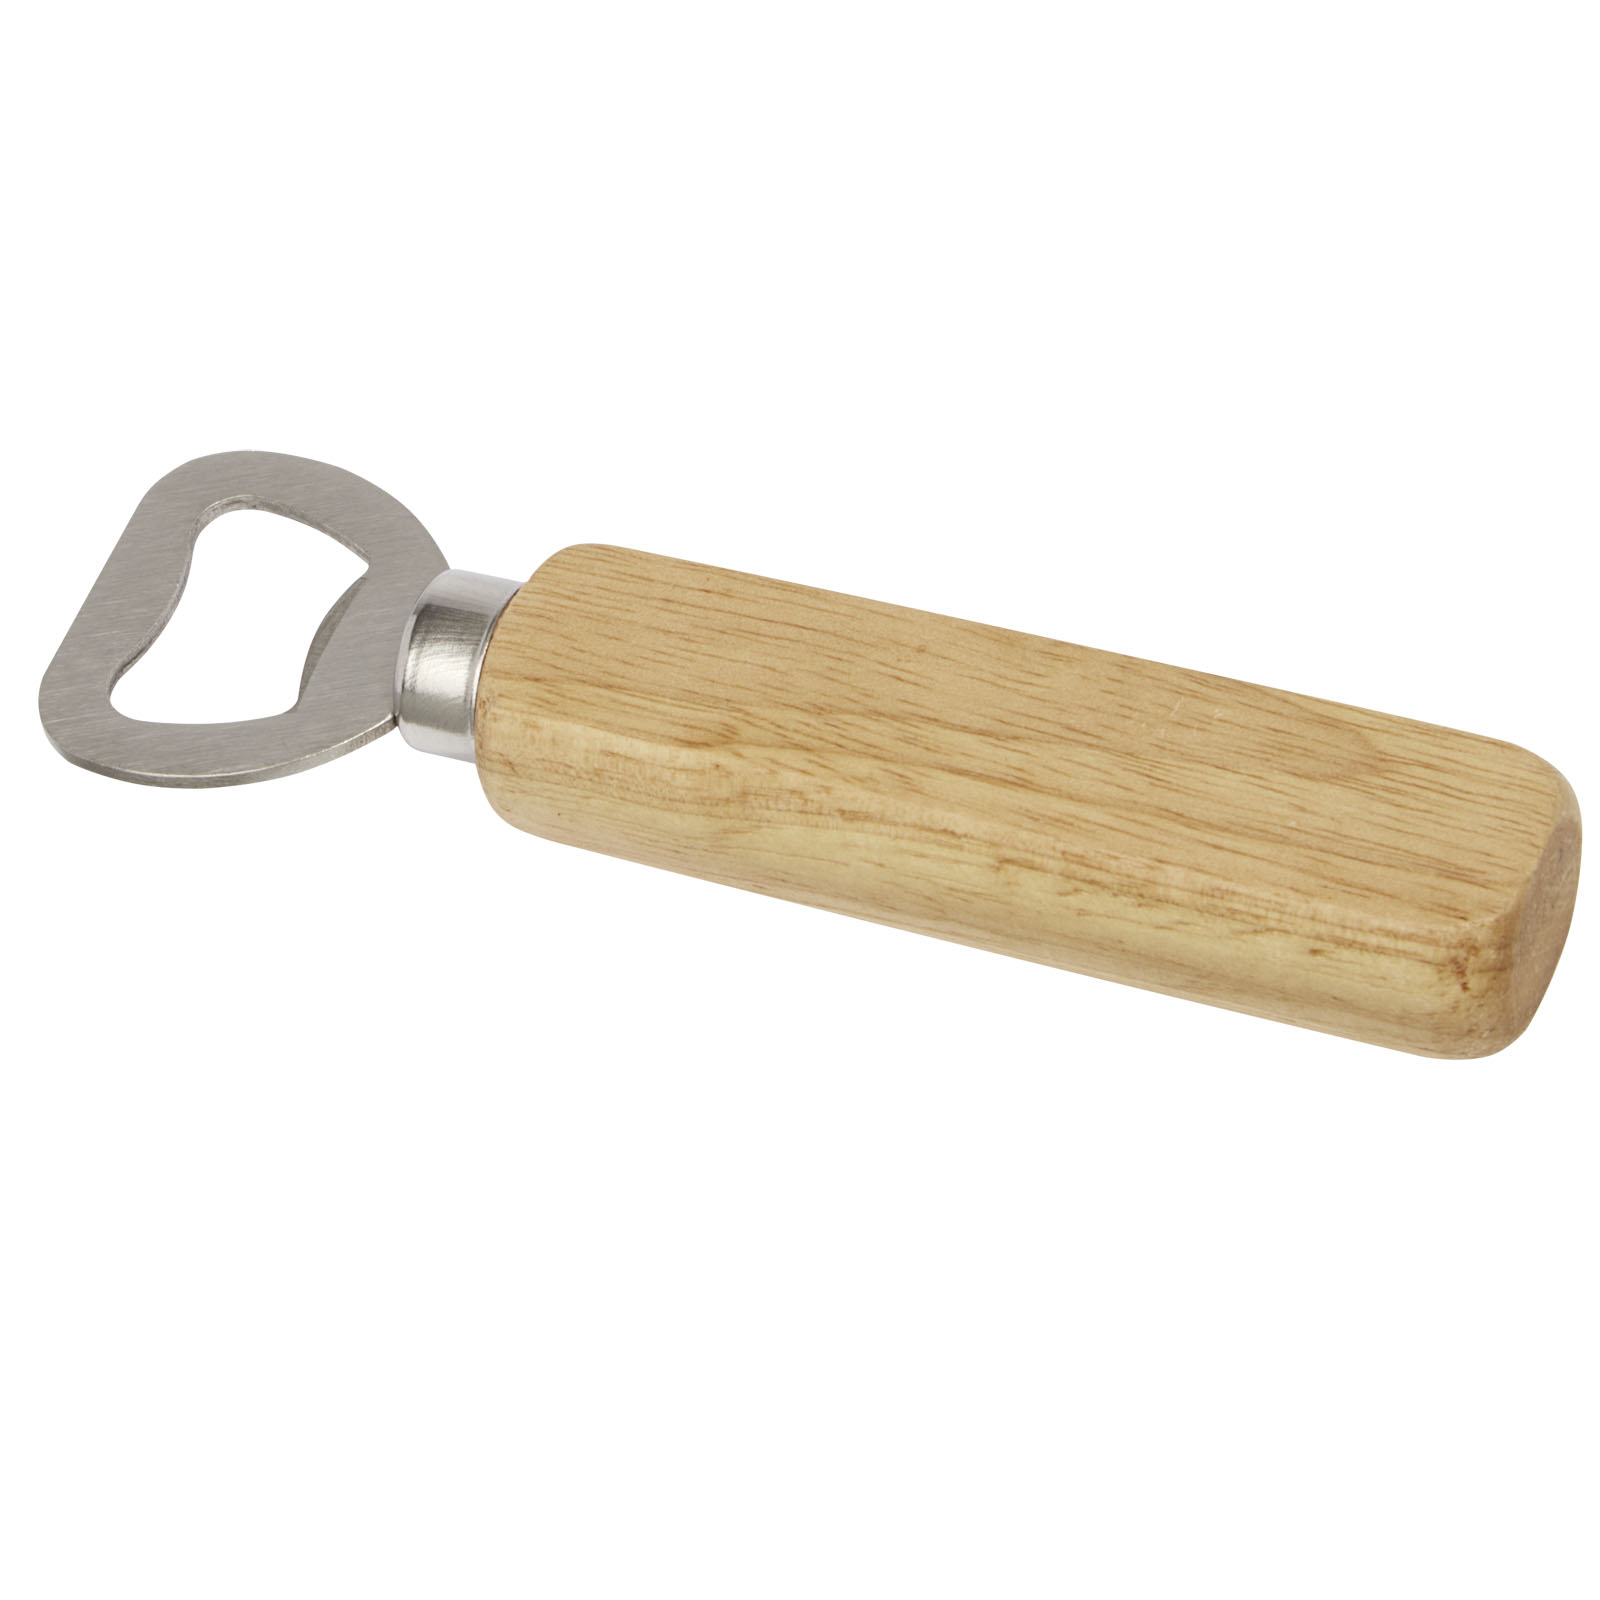 Bottle Openers & Accessories - Brama wooden bottle opener